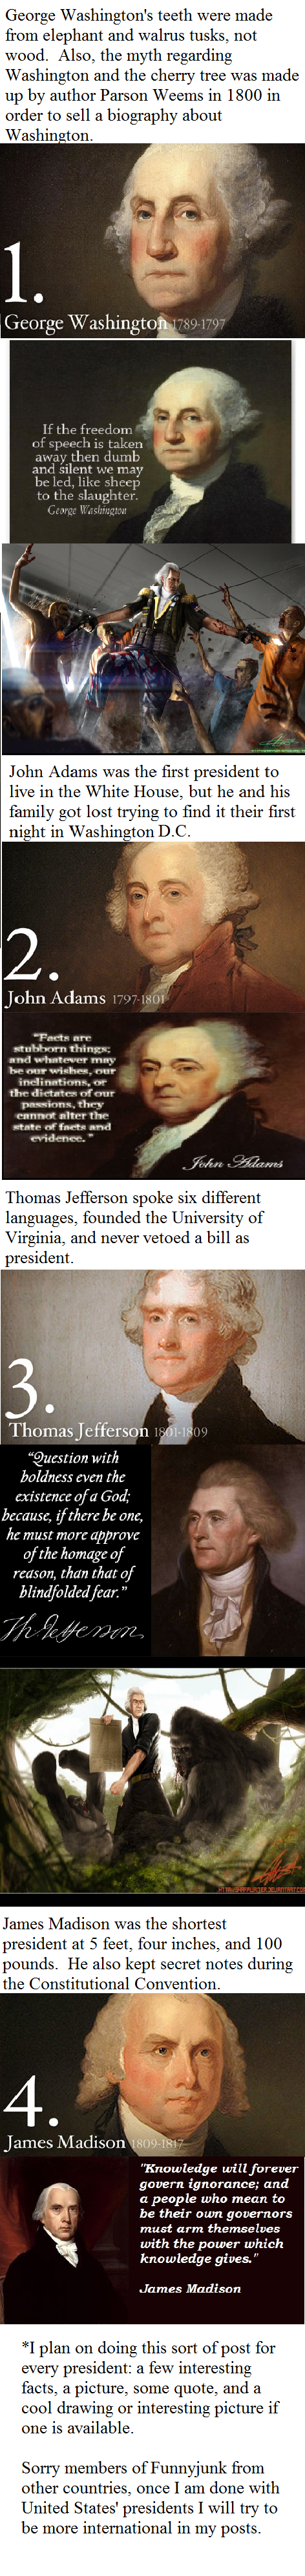 History Time - U.S. Presidents one. United States Presidents 1. George Washington 2. John Adams 3. Thomas Jefferson 4. James Madison.. No need to apologize. I find this interesting, nonetheless.